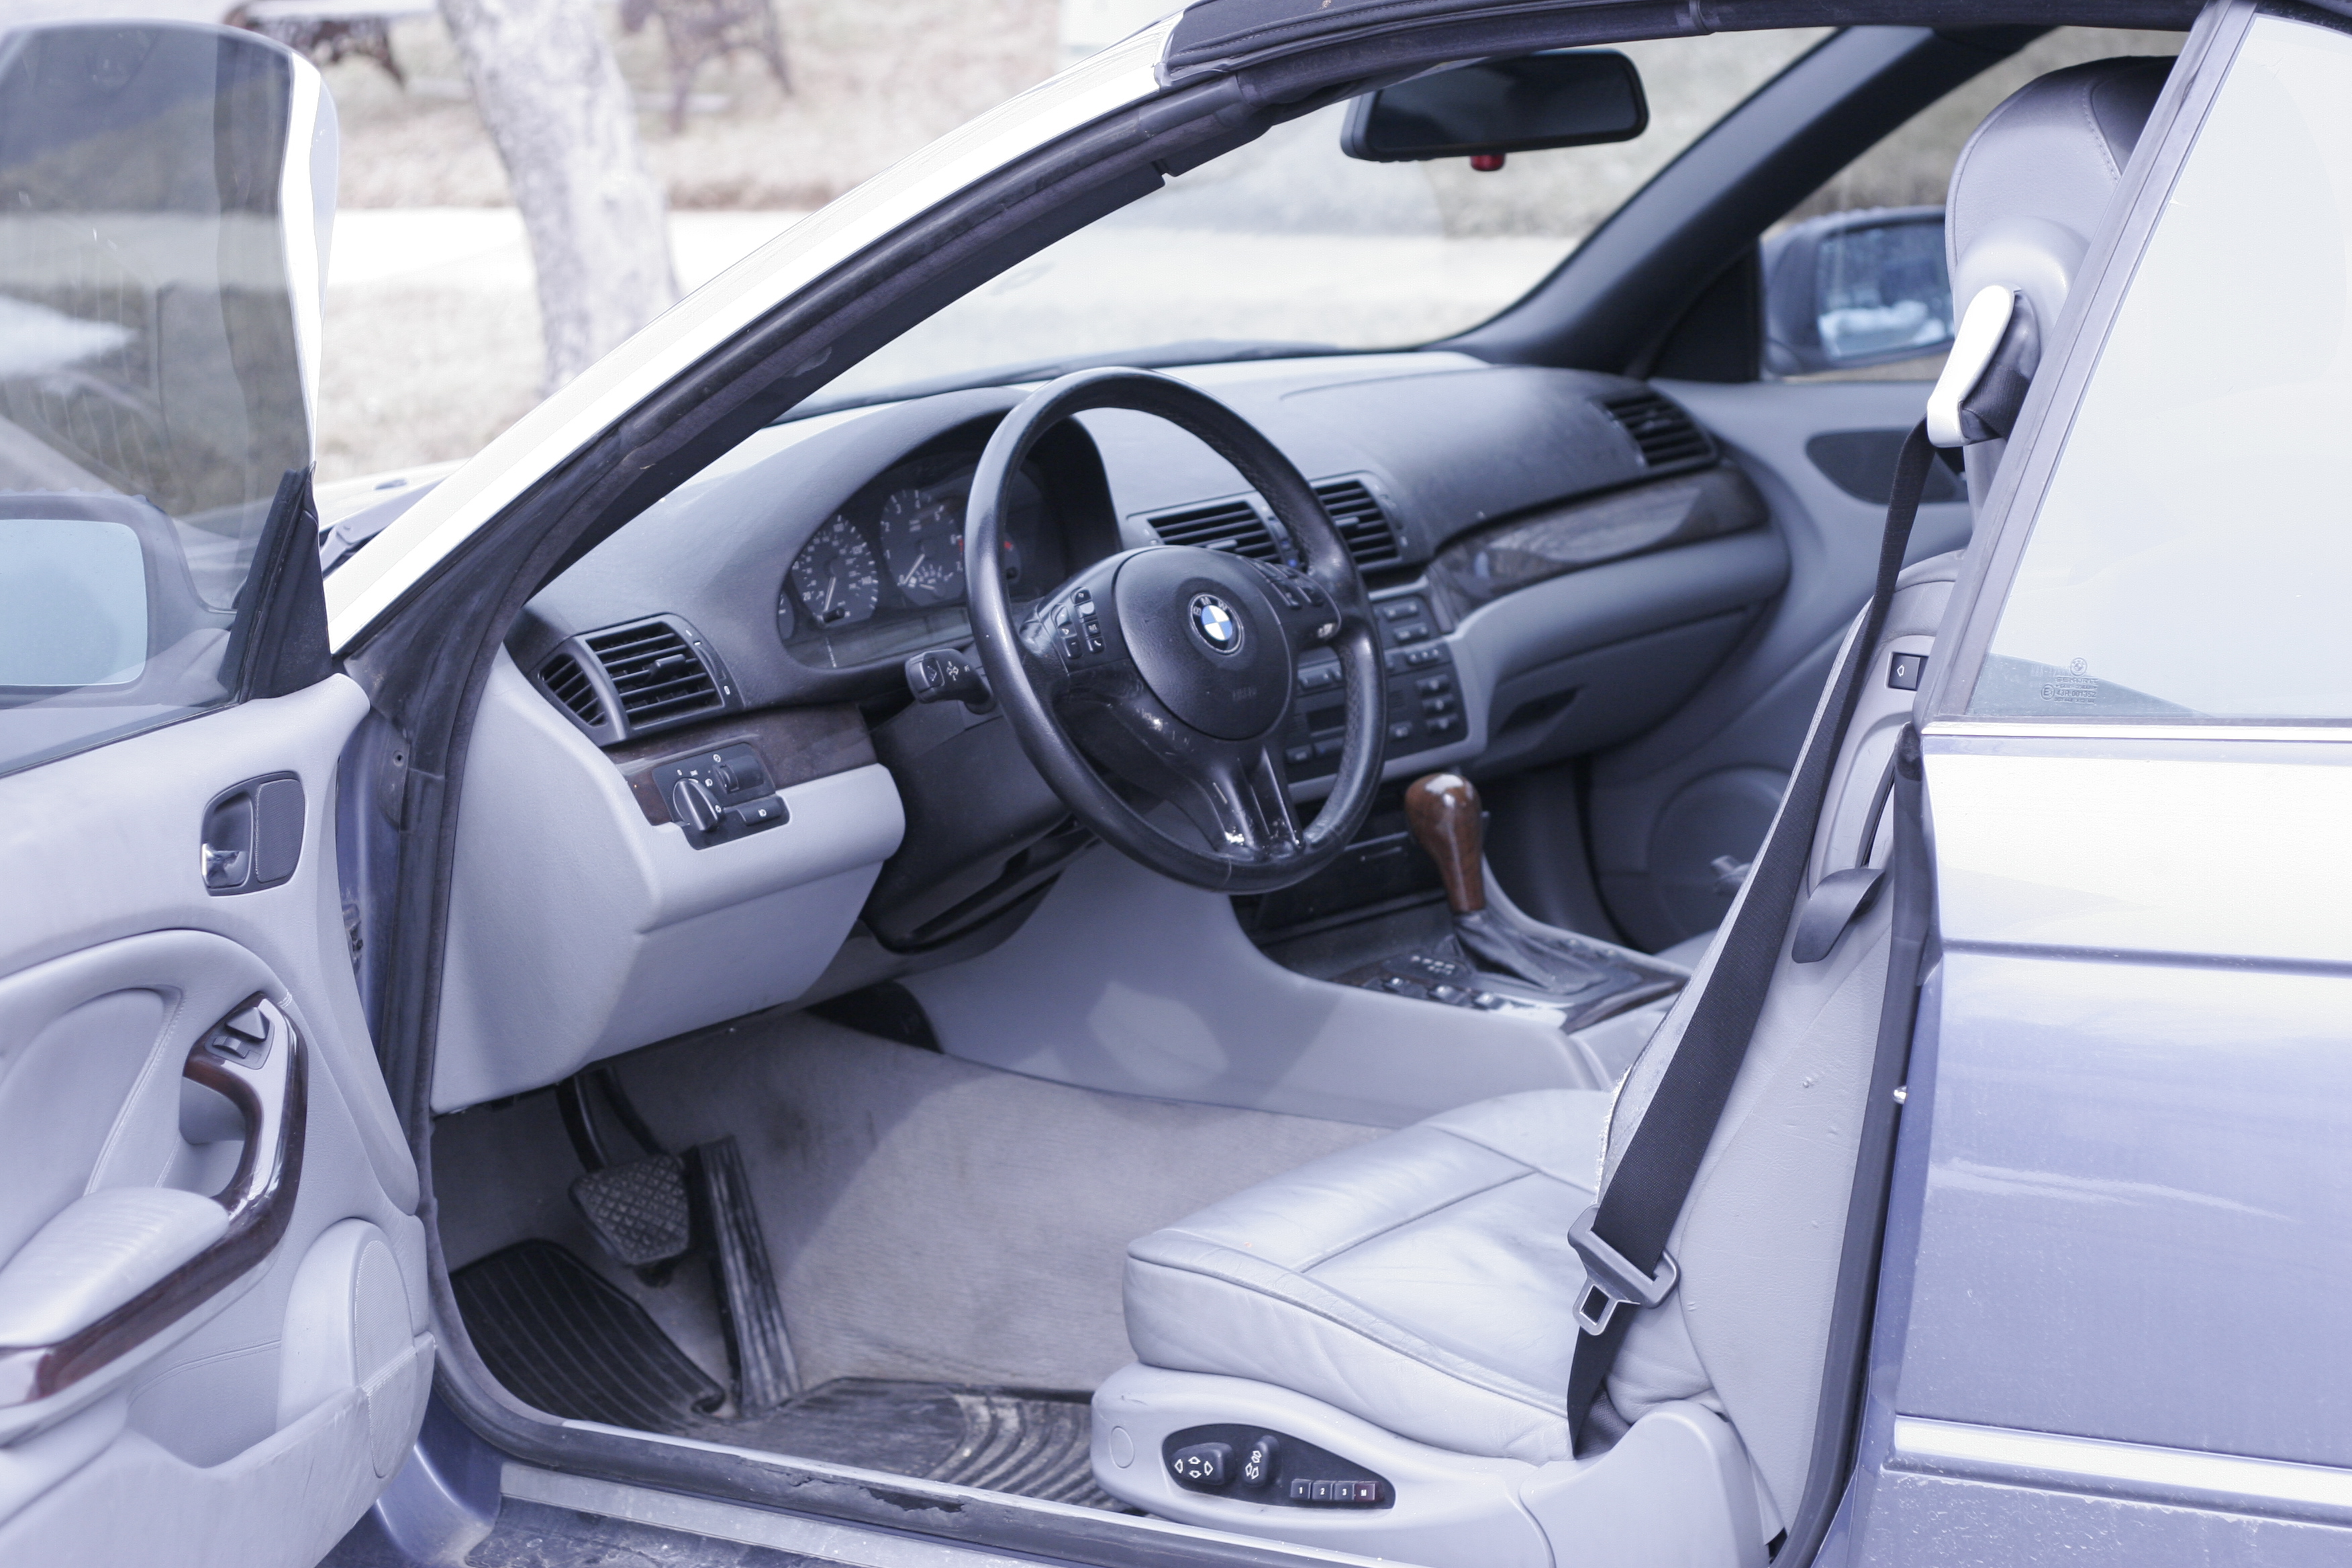 2000 BMW 323ci interior | Flickr - Photo Sharing!